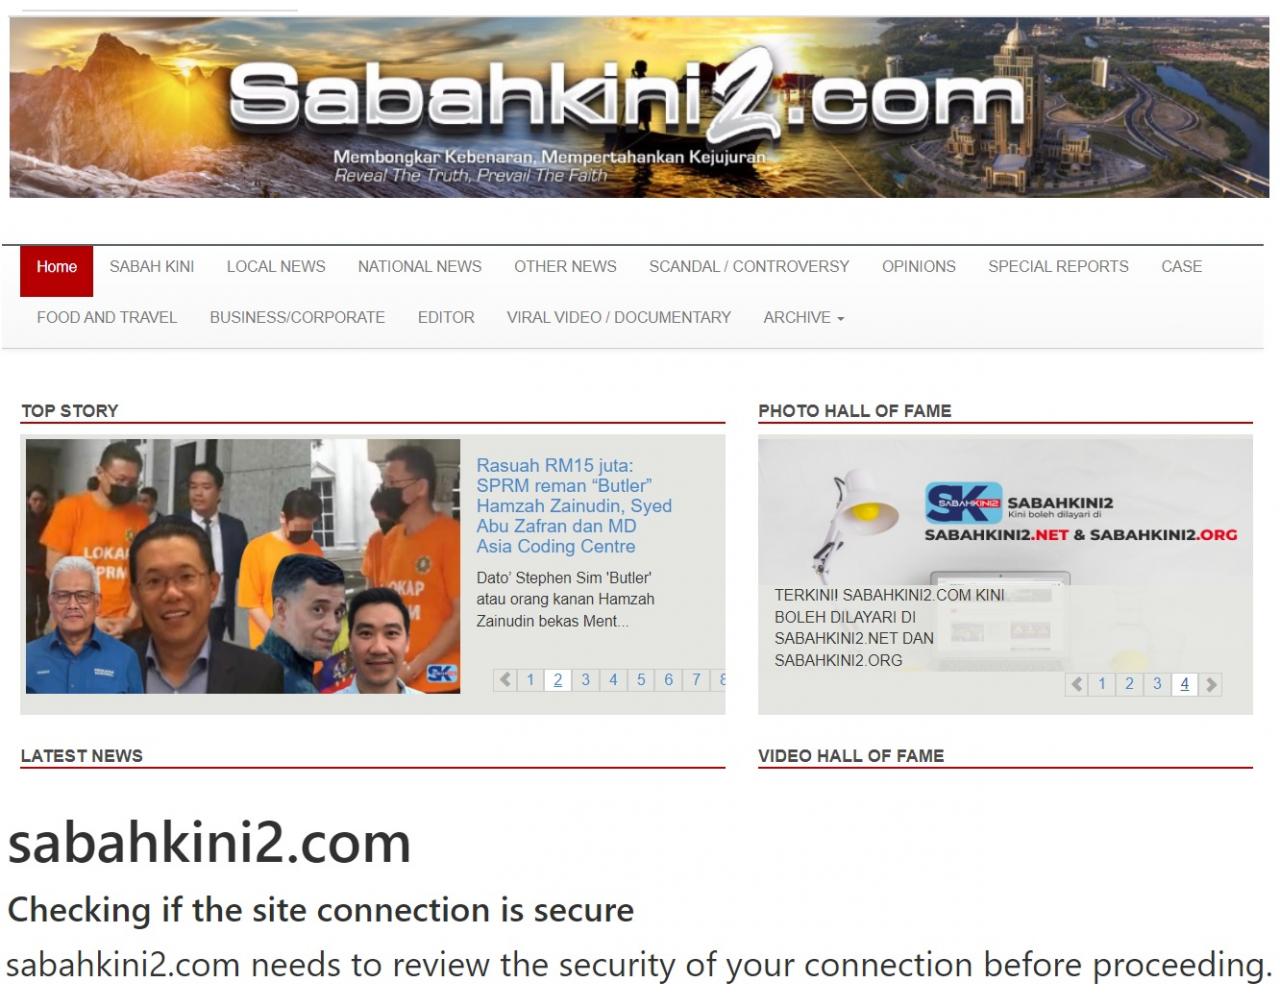 Serangan dan DDoS Protection untuk Portal Sabahkini2.com